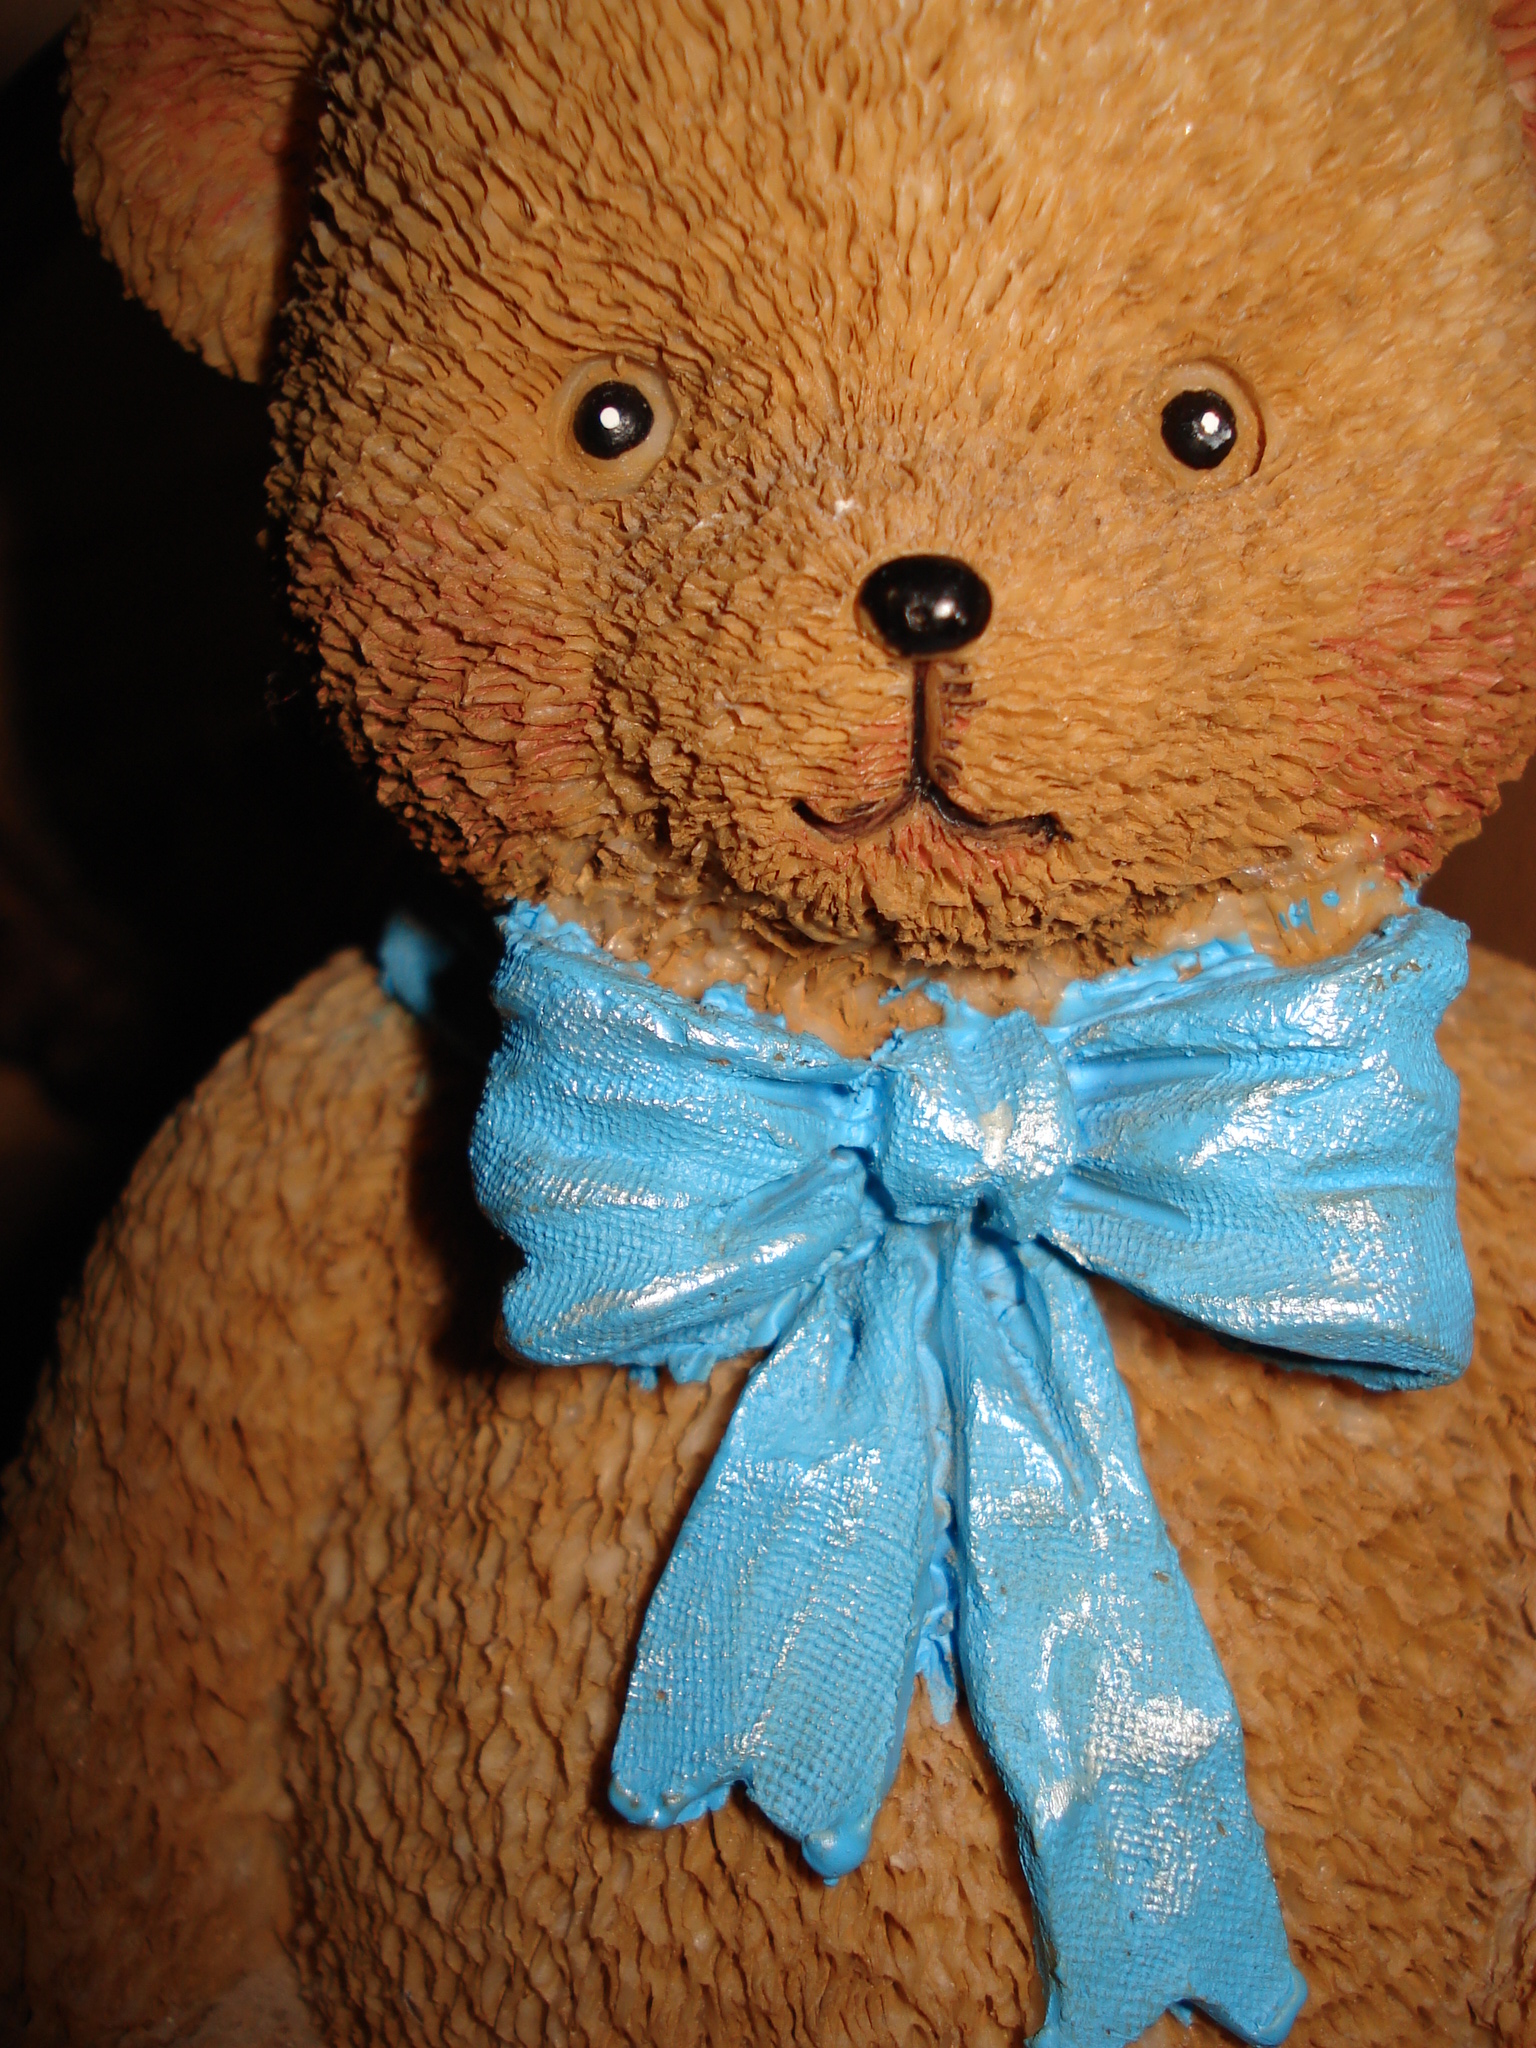 a small teddy bear wearing a blue bow